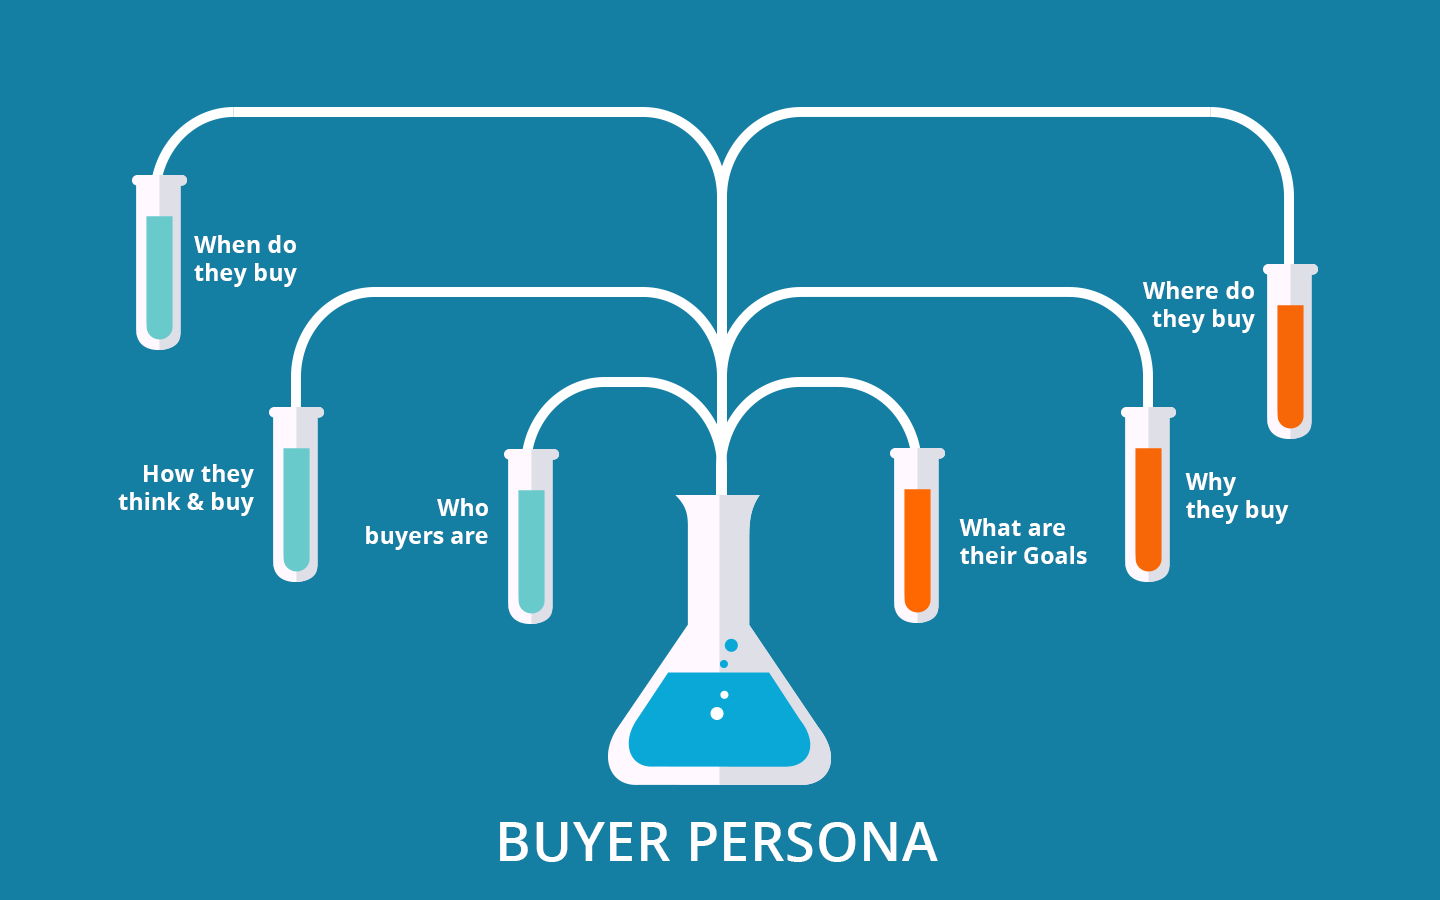 buyer persona explained image